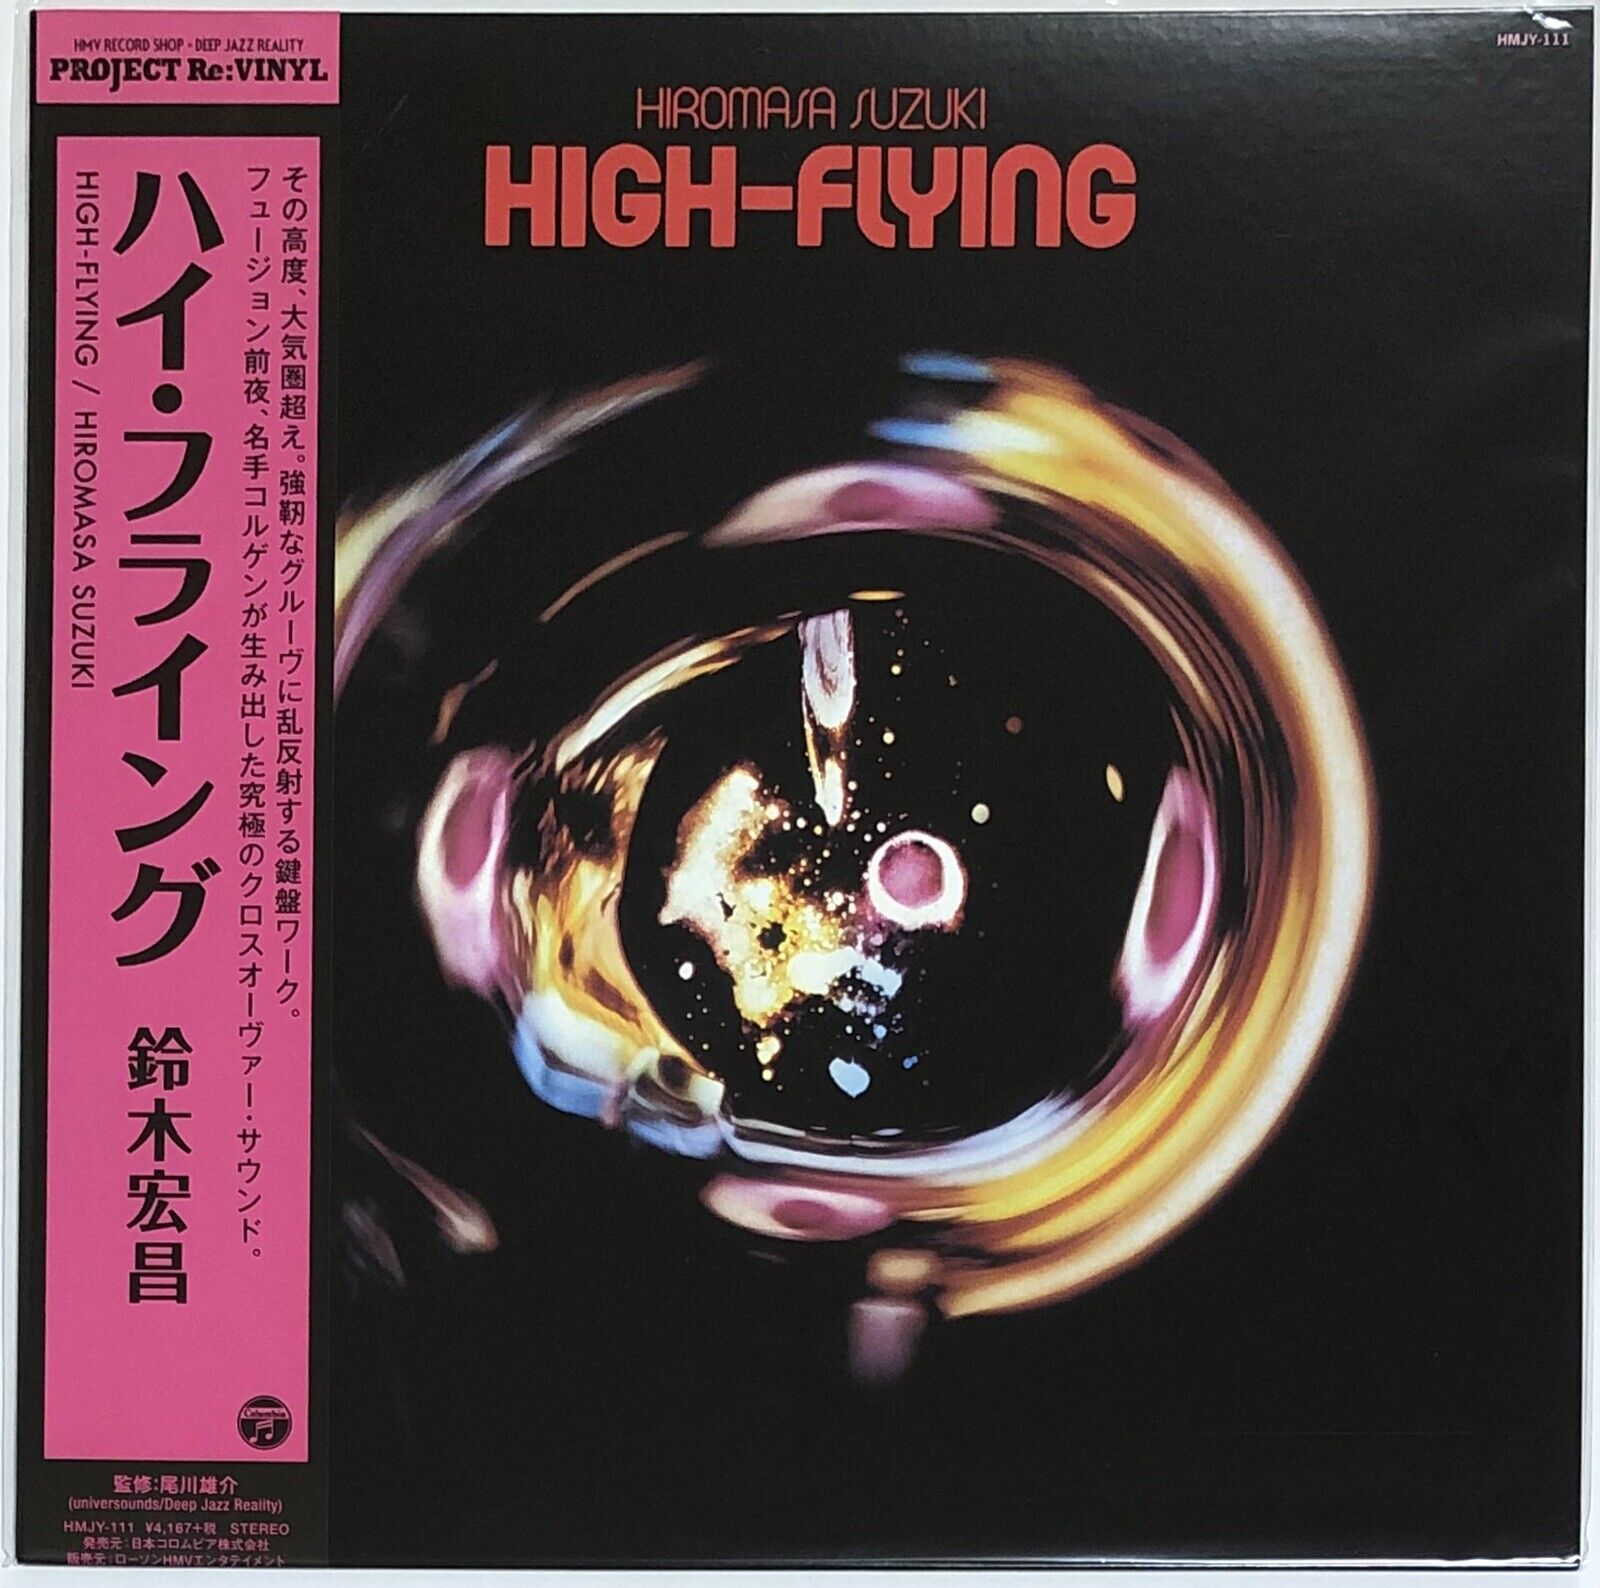 [NEW] Hiromasa Suzuki / HIGH-FLYING 1976 Vinyl LP Japan Jazz Fusion